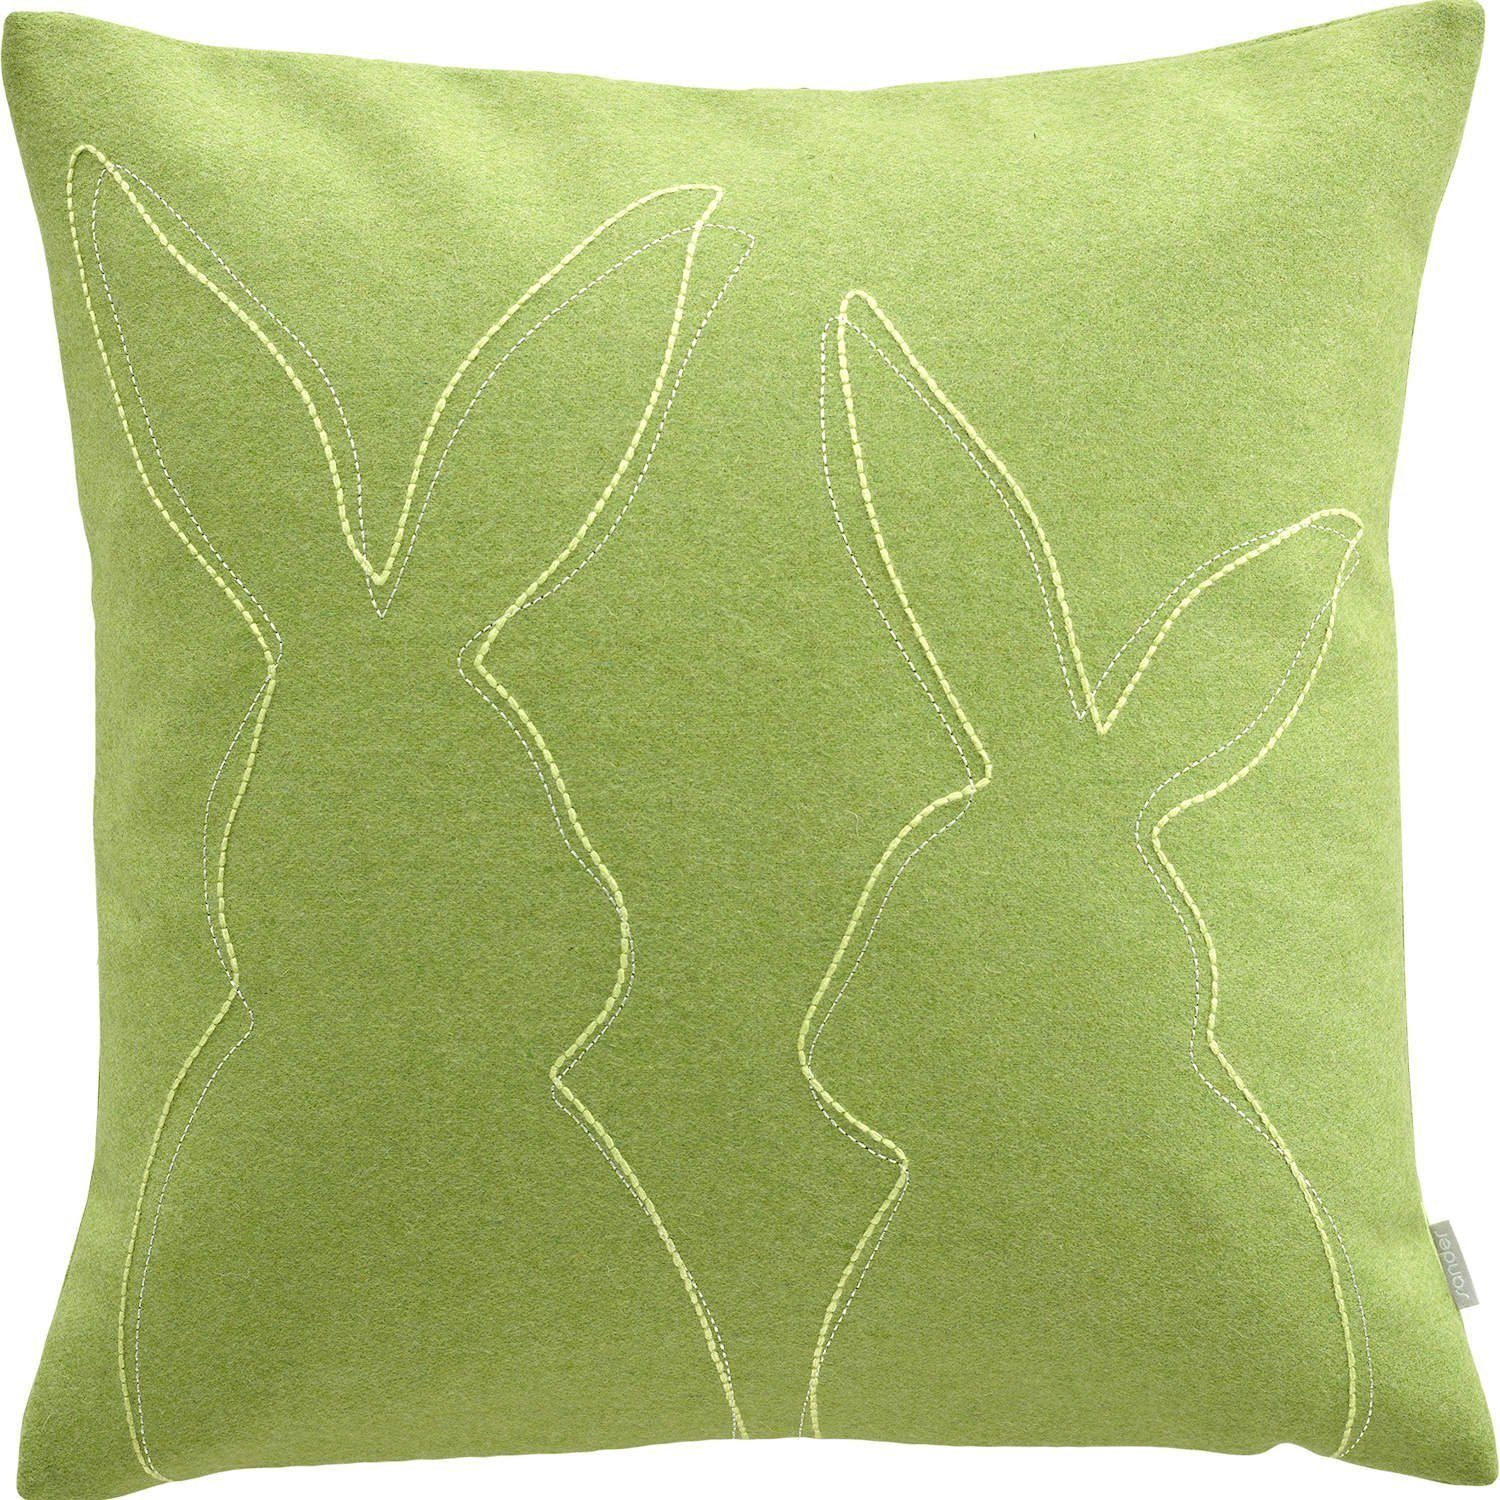 Kissenhülle SANDER * Kissenhülle Benny Wool in hell grün 40 x 40 cm Hase gestickt, sander table + home (1 Stück)